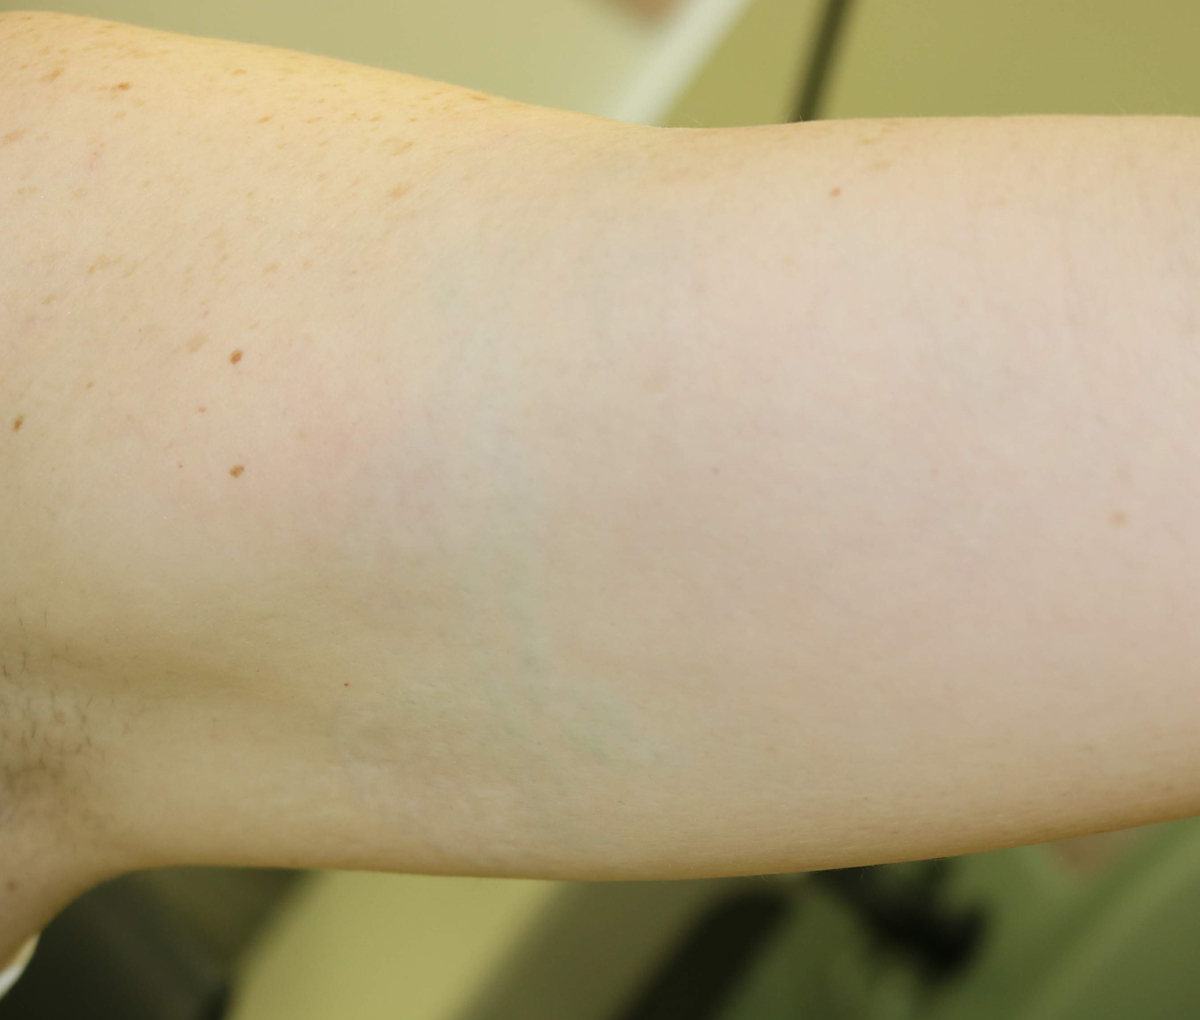 Tattooentfernung am Oberarm nach der 12. Behandlung